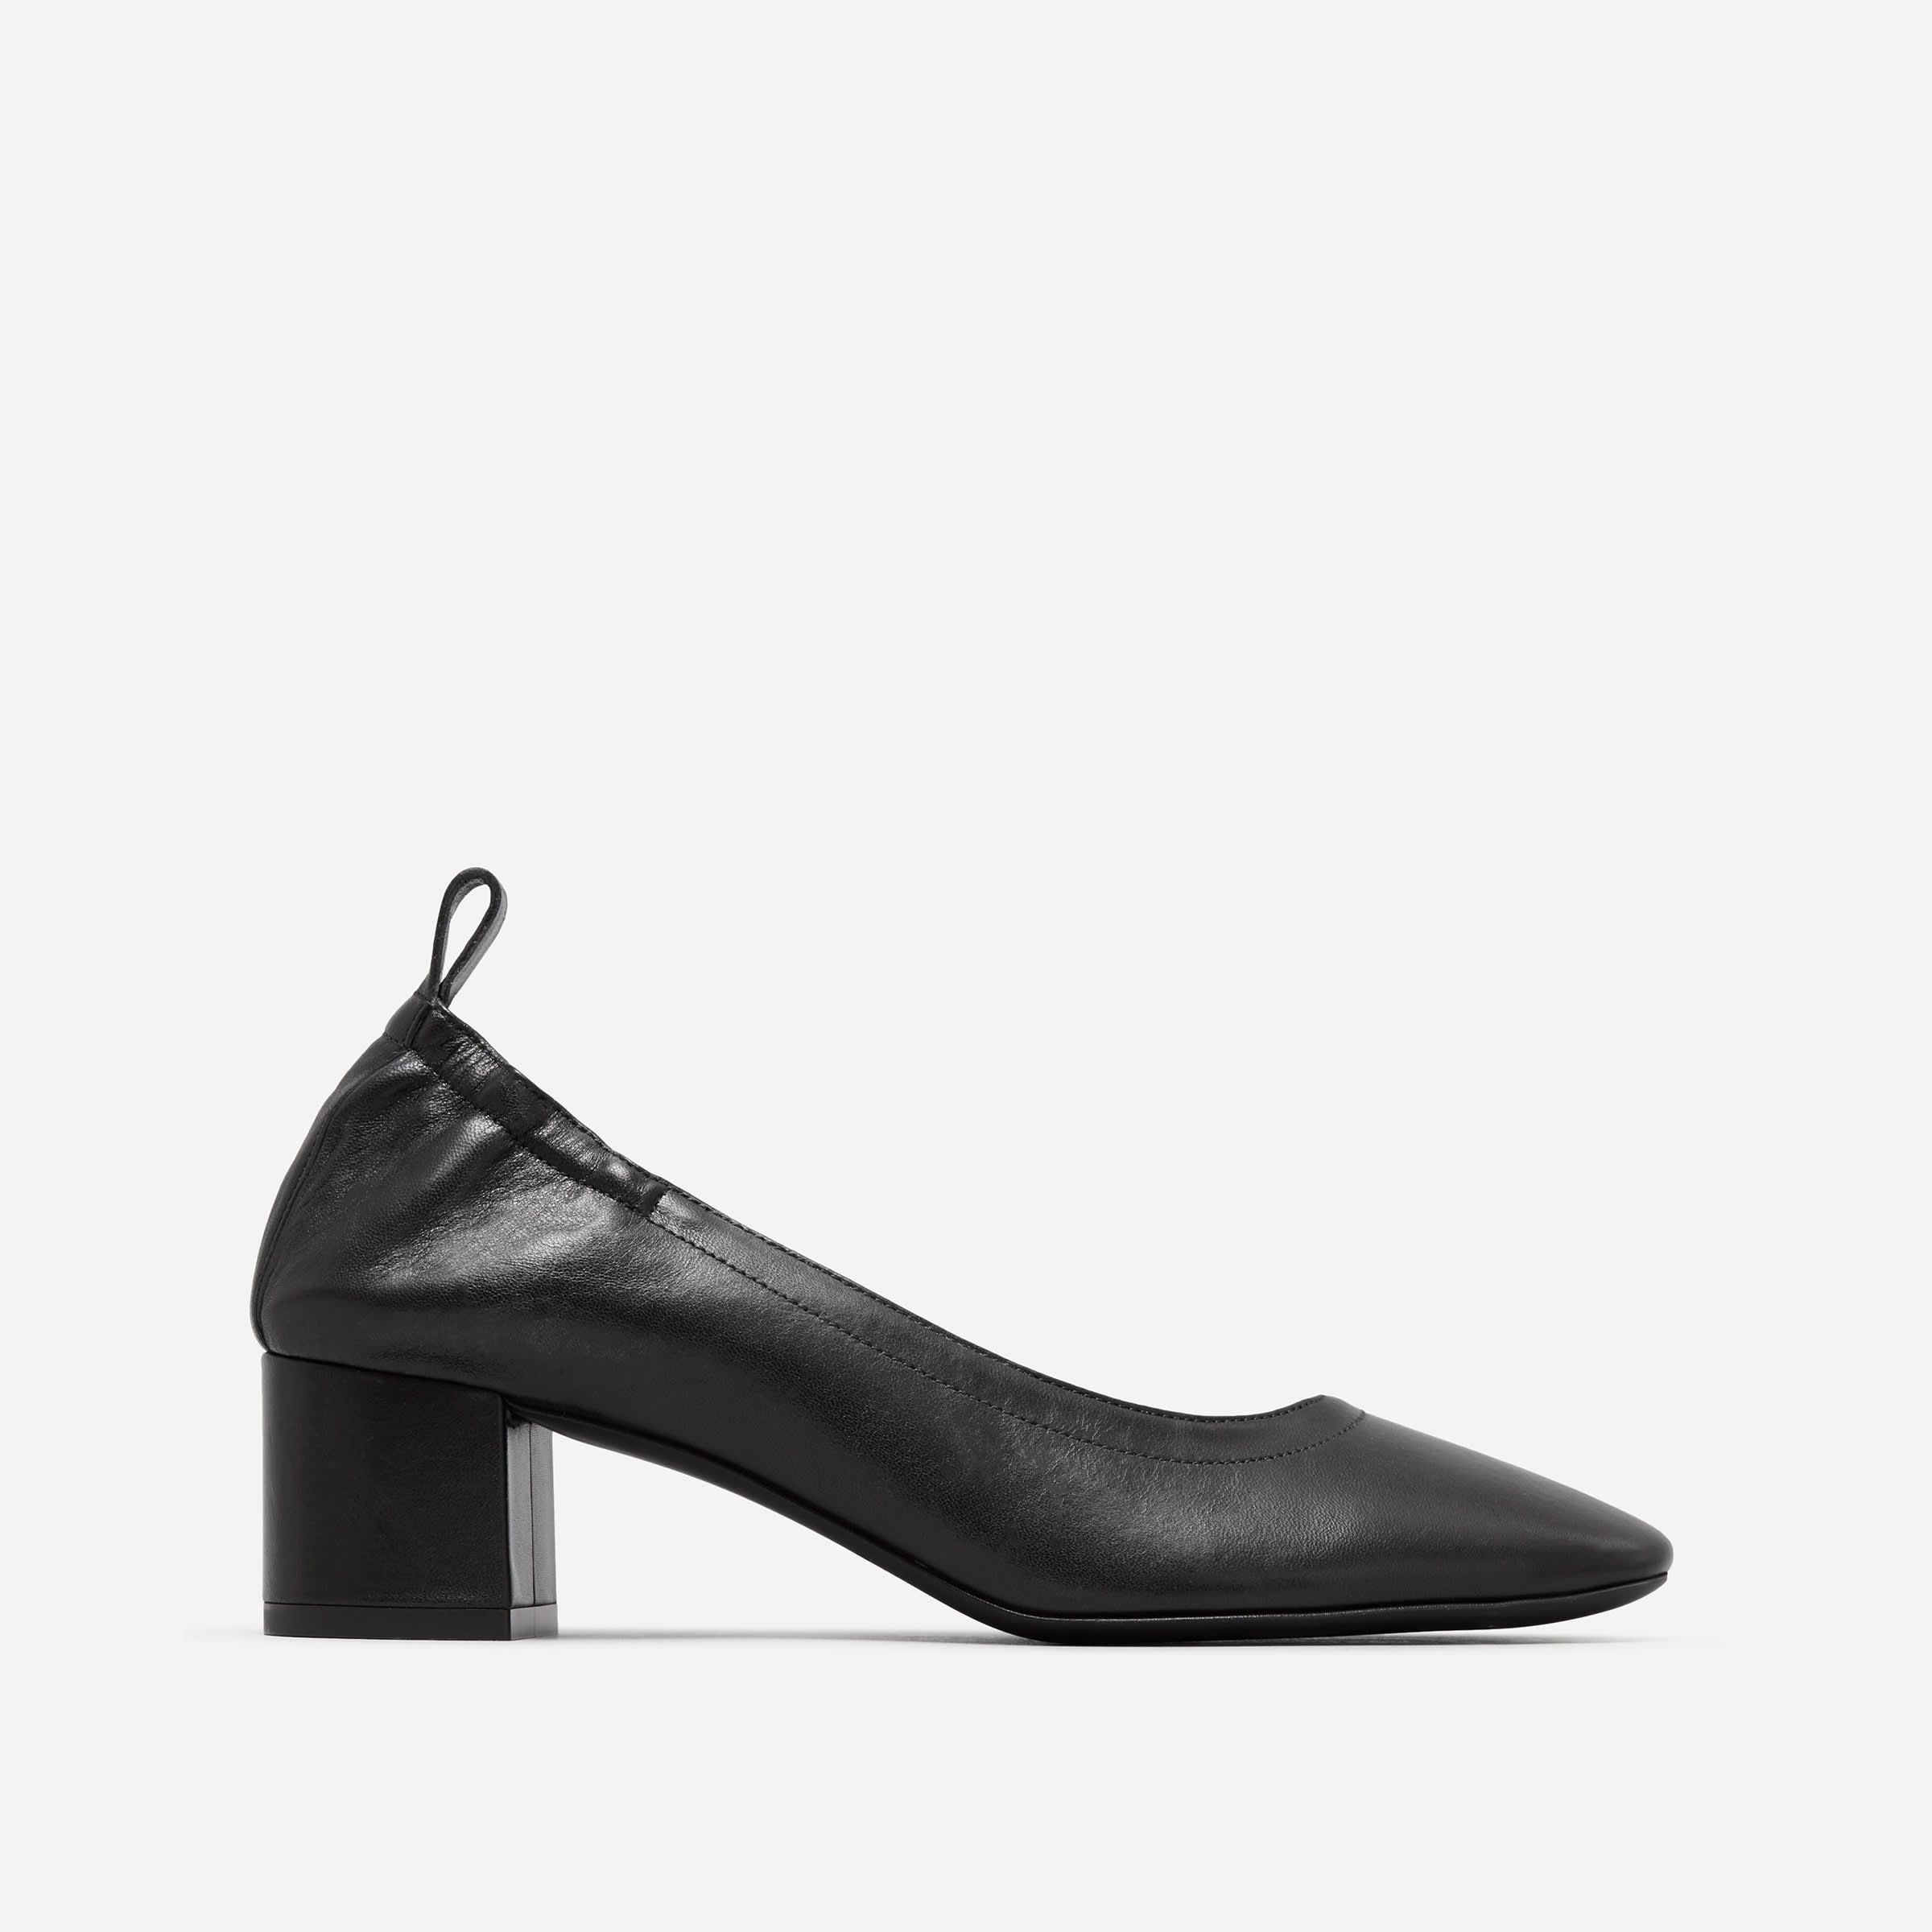 comfortable black high heels